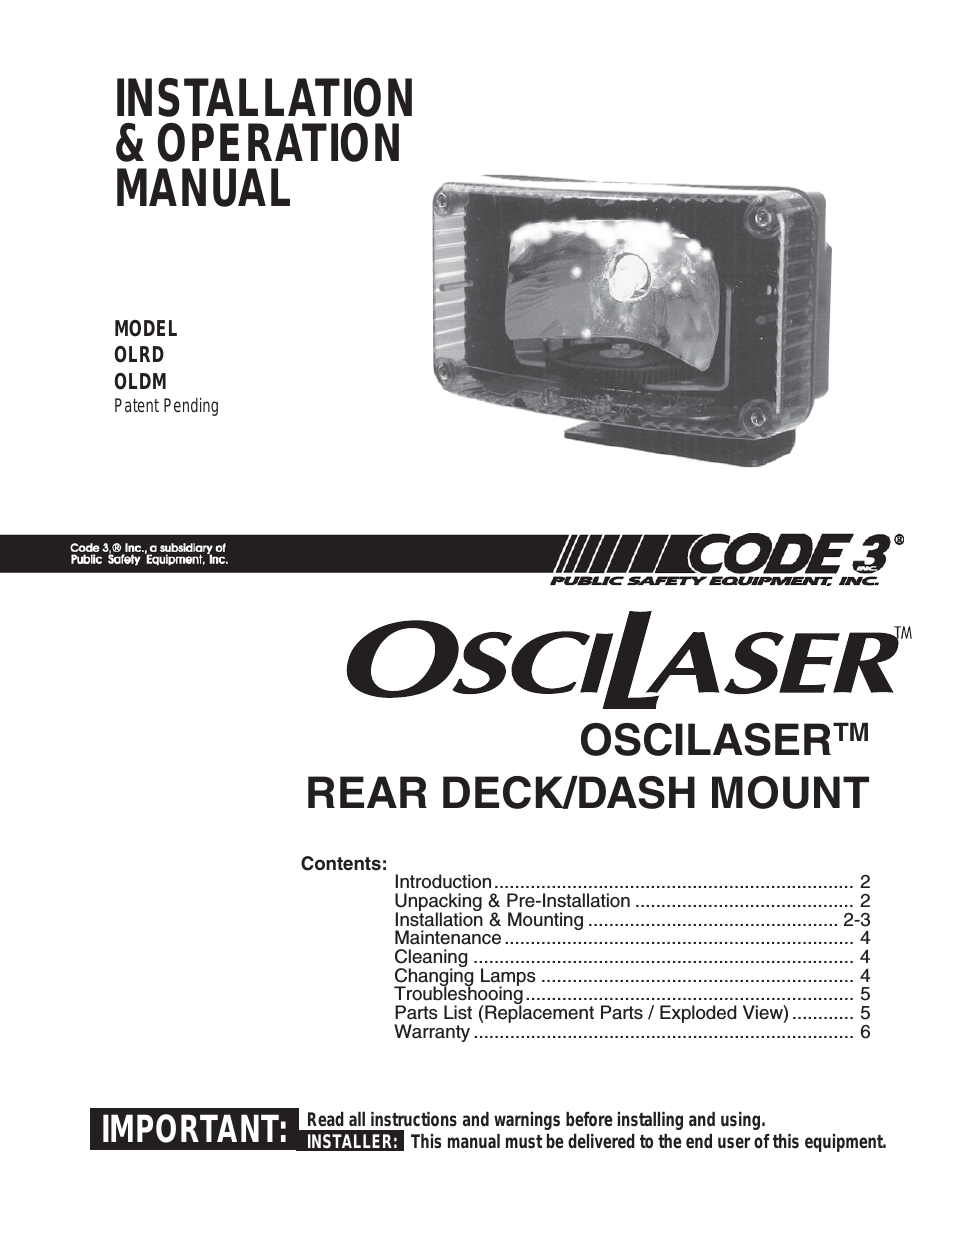 OsciLaser Rear Deck/Dash Mount